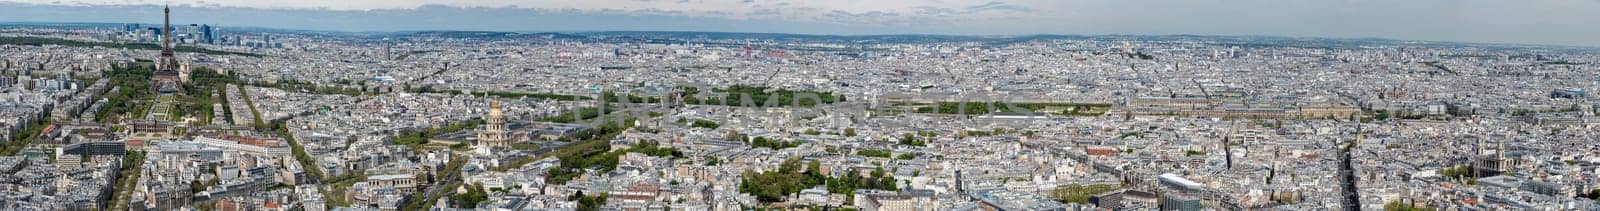 paris cityscape aerial landscape huge panorama